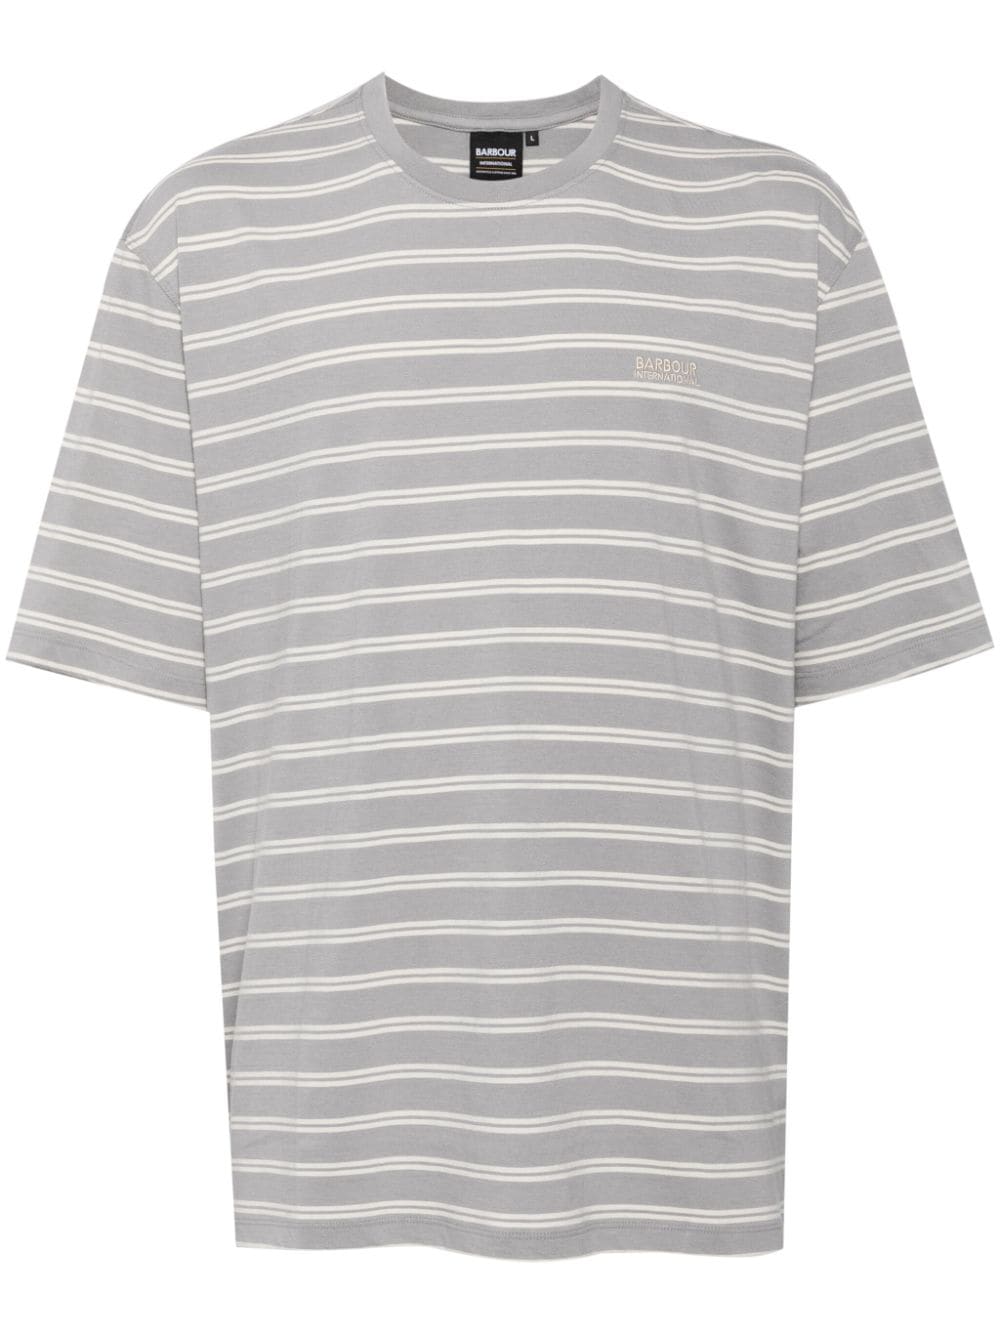 Barbour striped cotton T-shirt - Grau